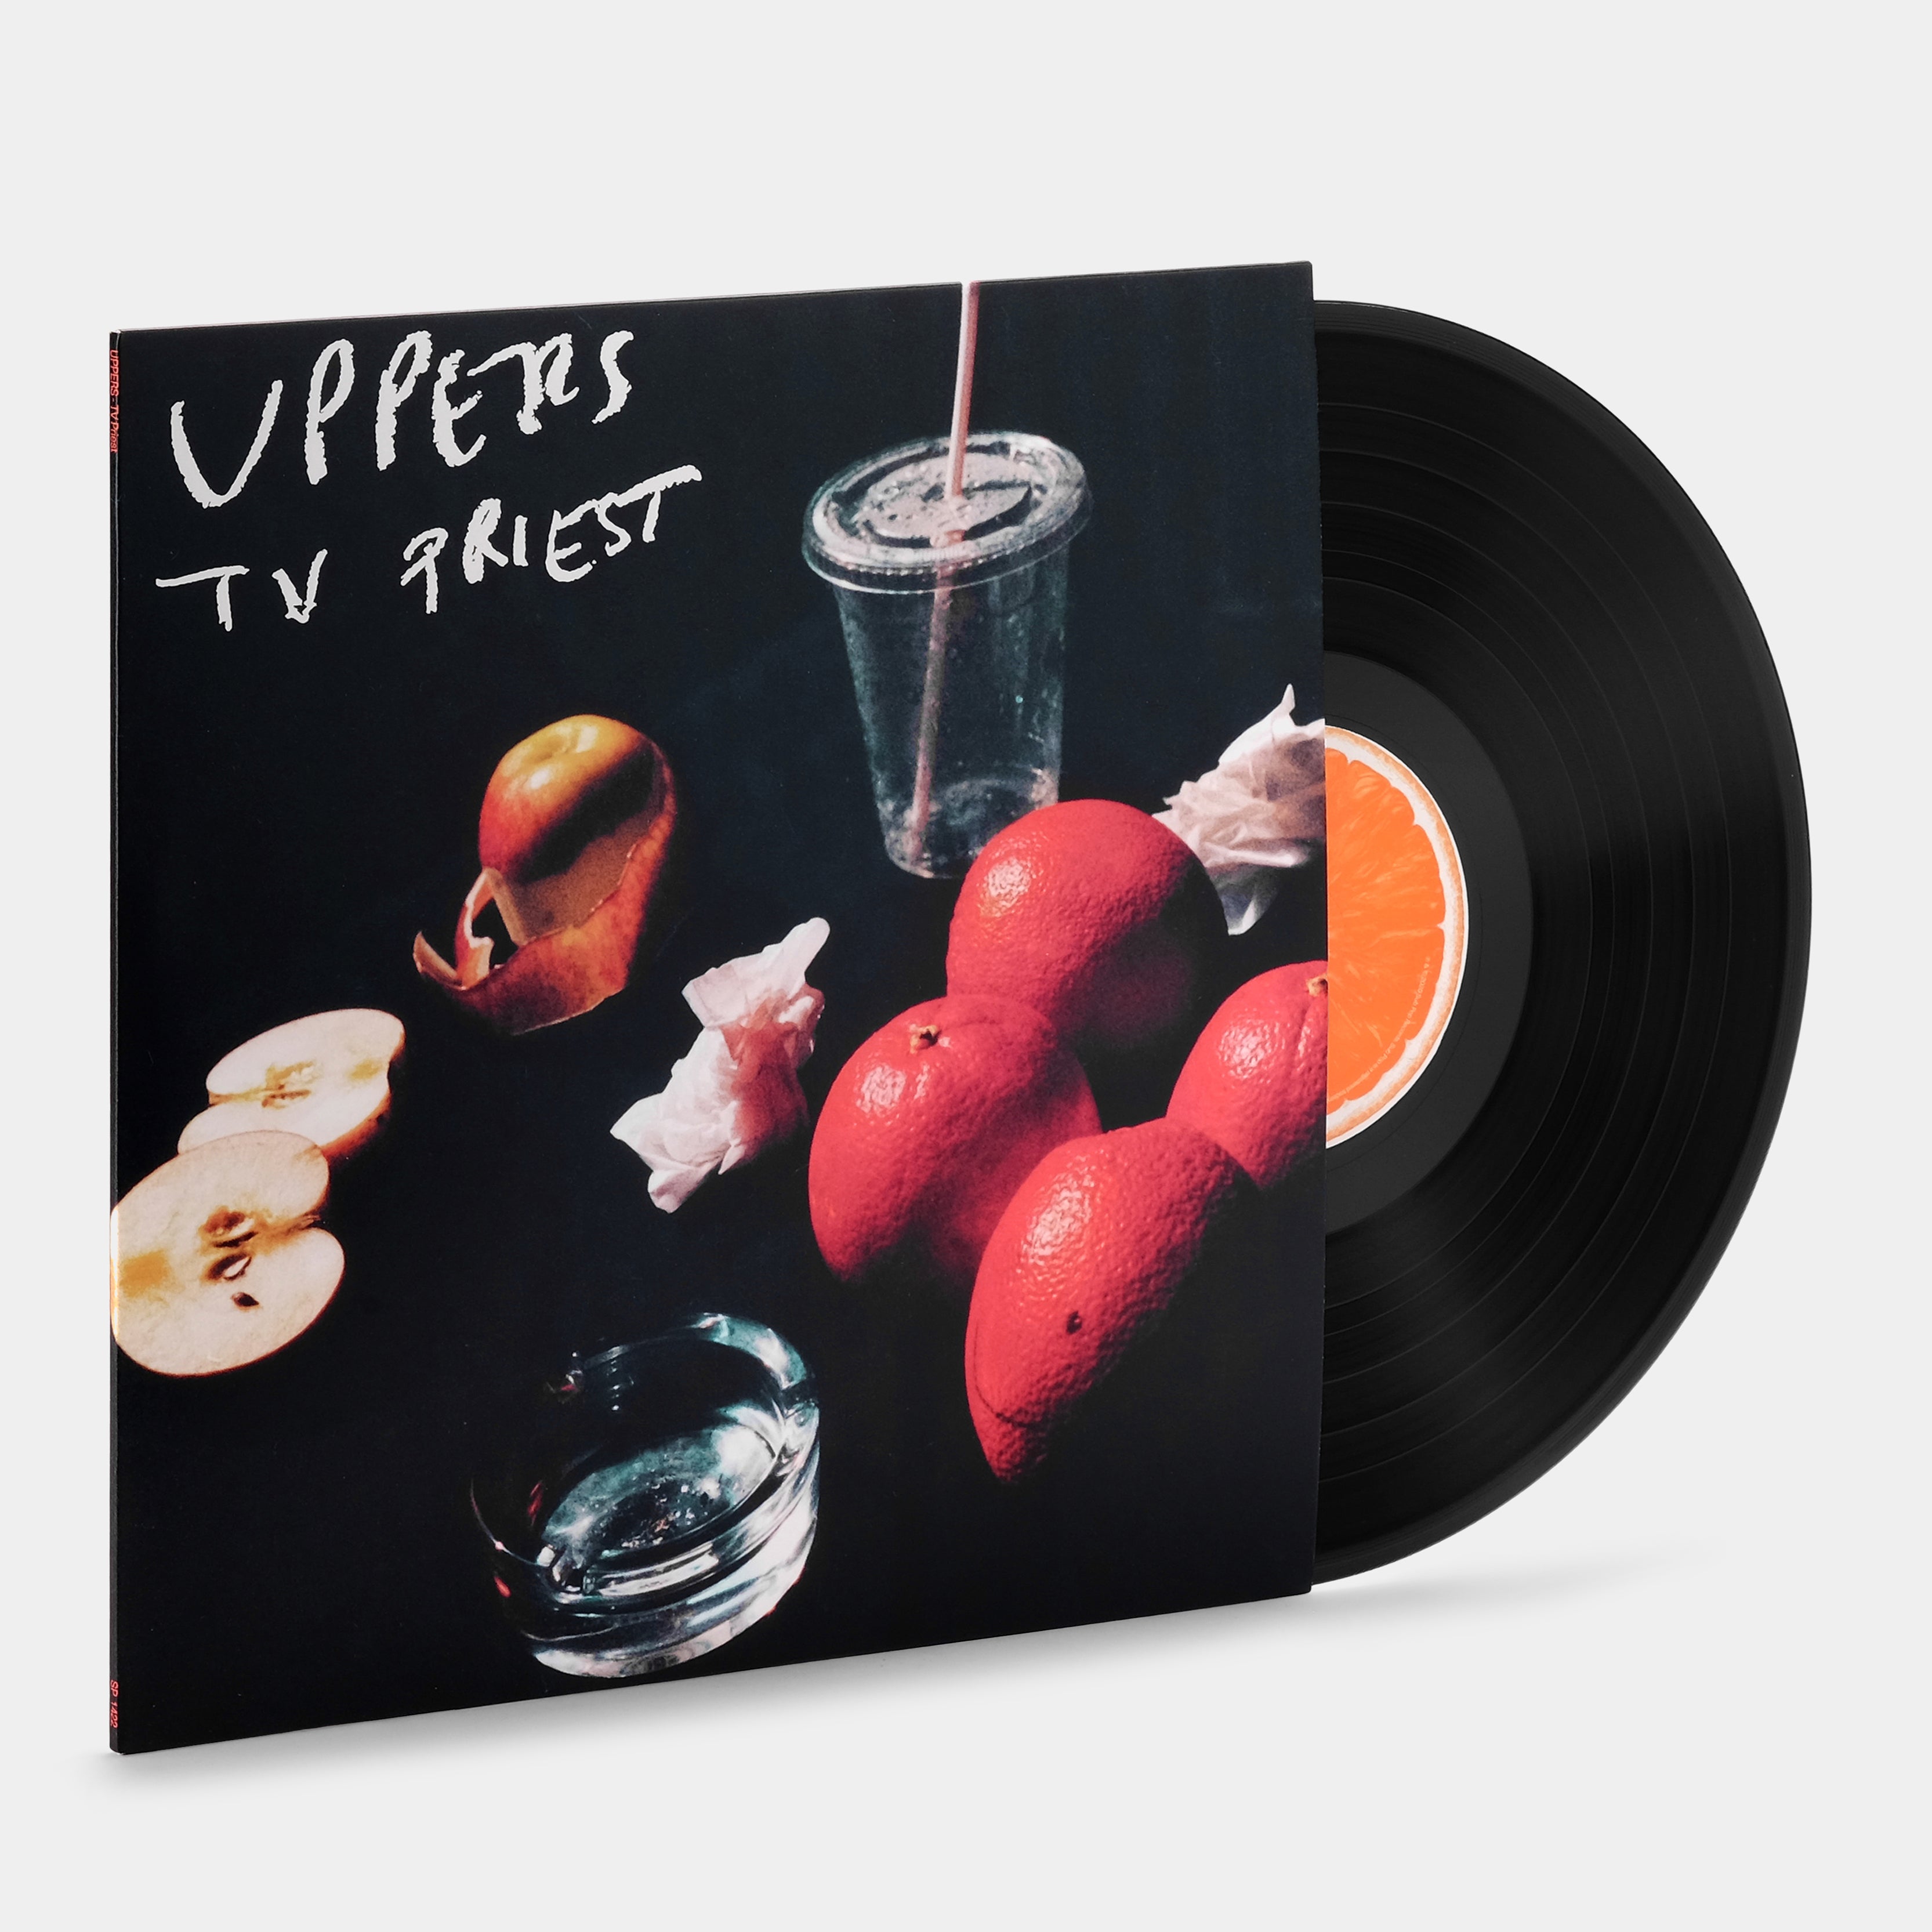 TV Priest - Uppers LP Vinyl Record